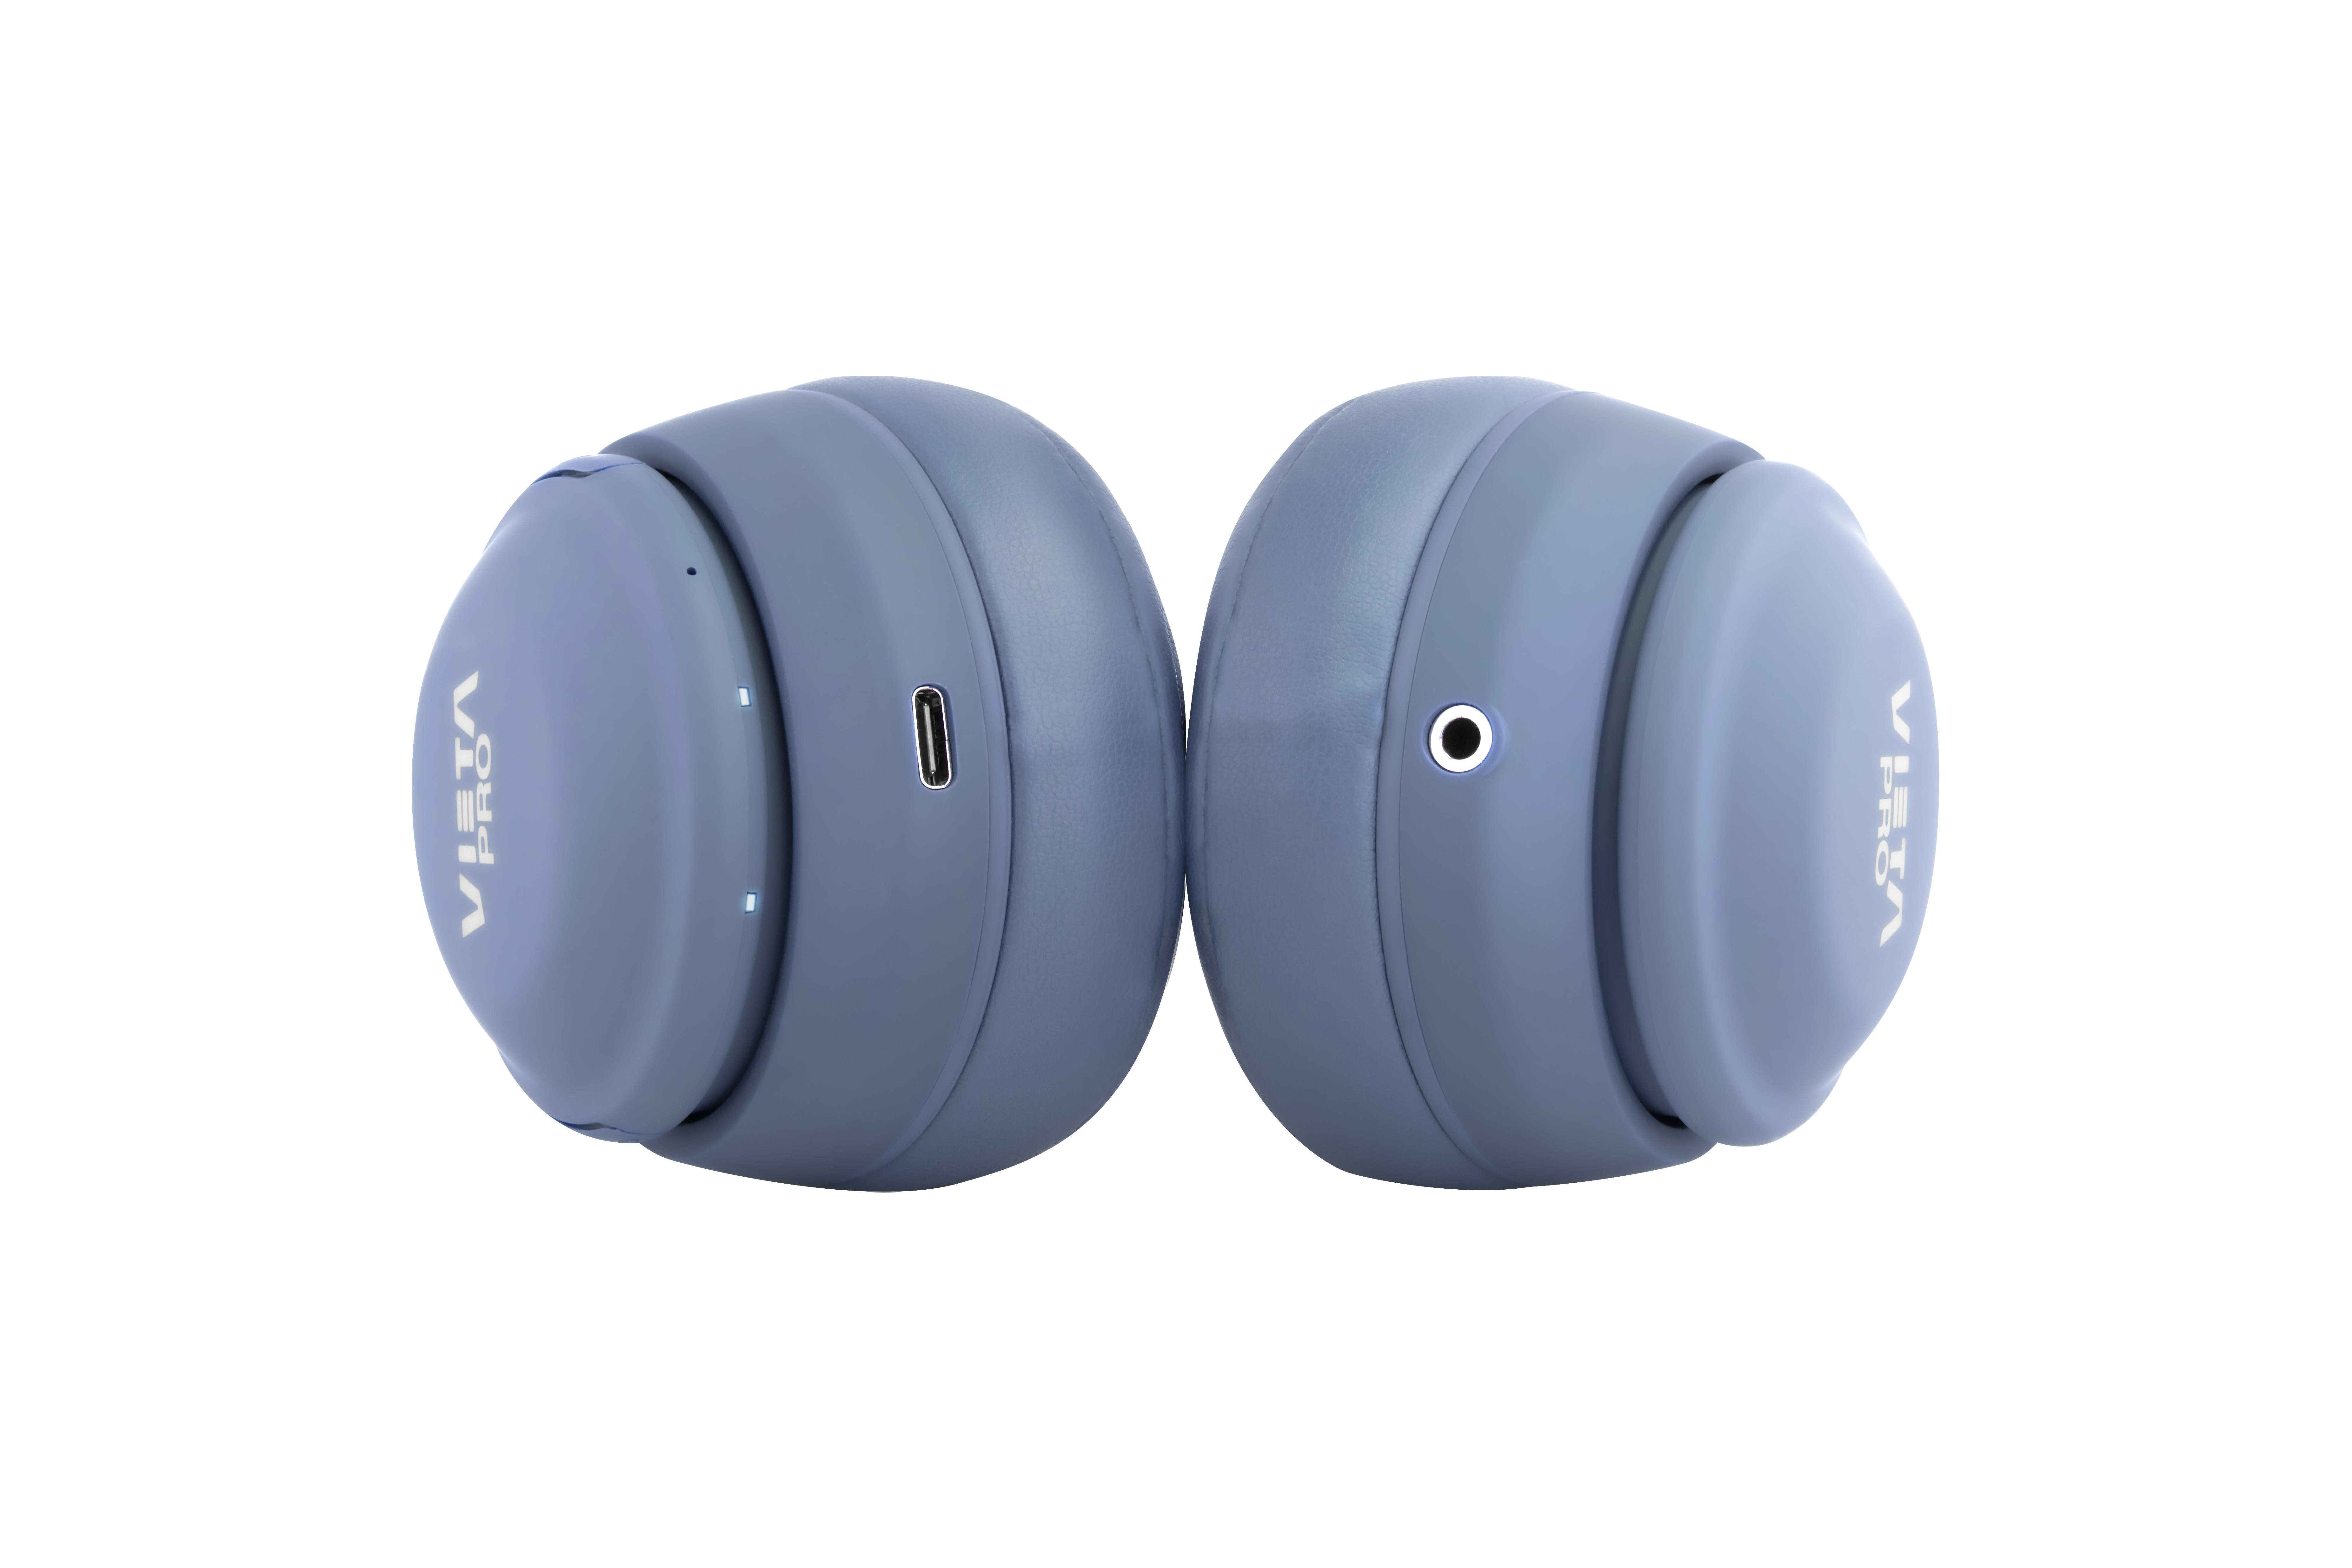 VIETA #SWING, Bluetooth Kopfhörer Blau Over-ear